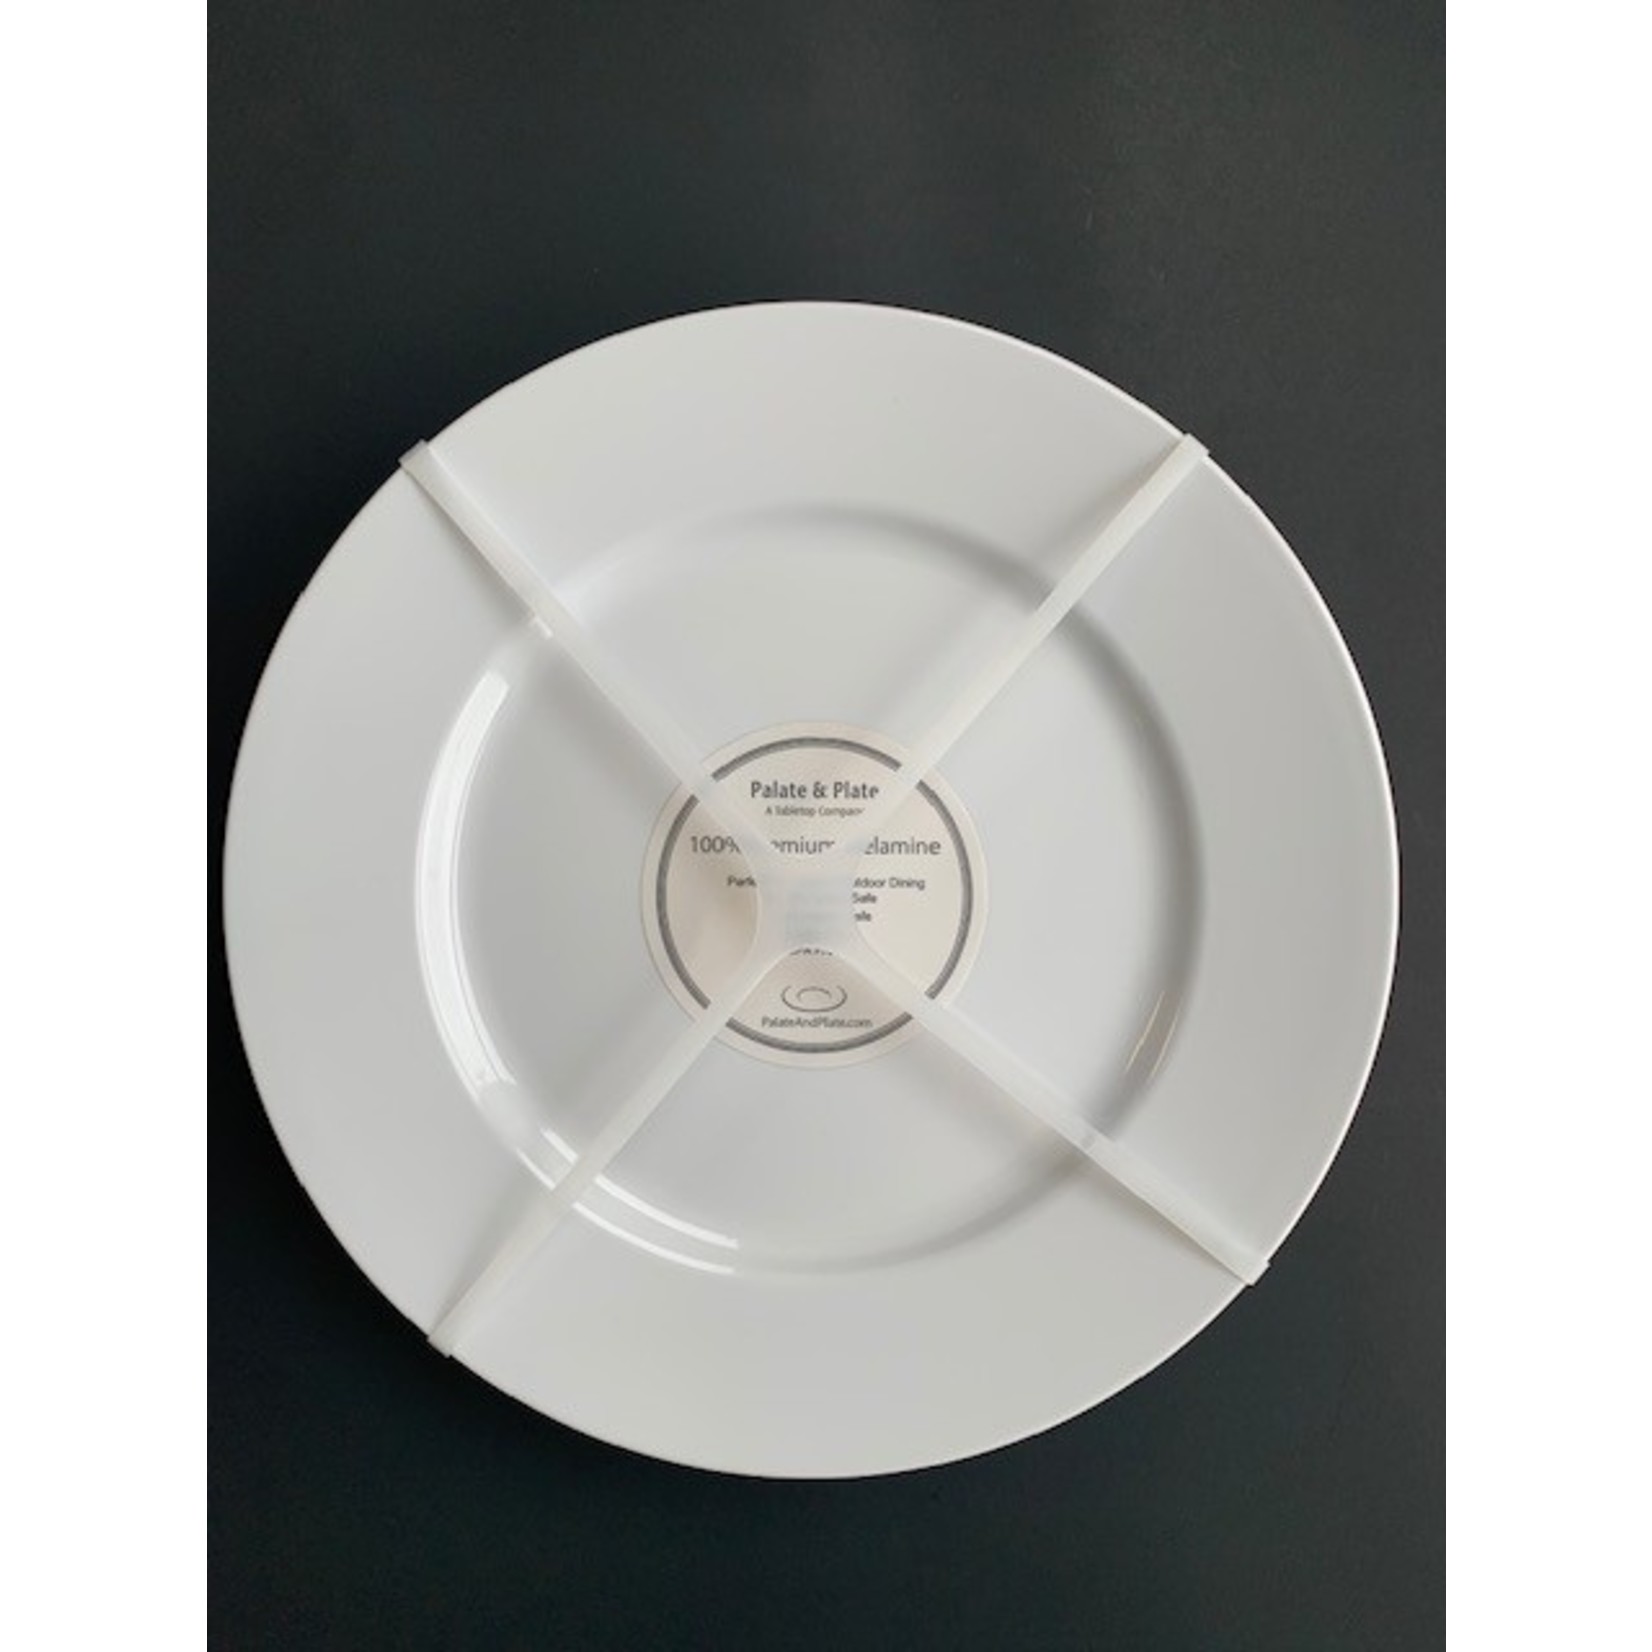 Palate and Plate MM5018S 9.5" rim dinner melamine 24/case